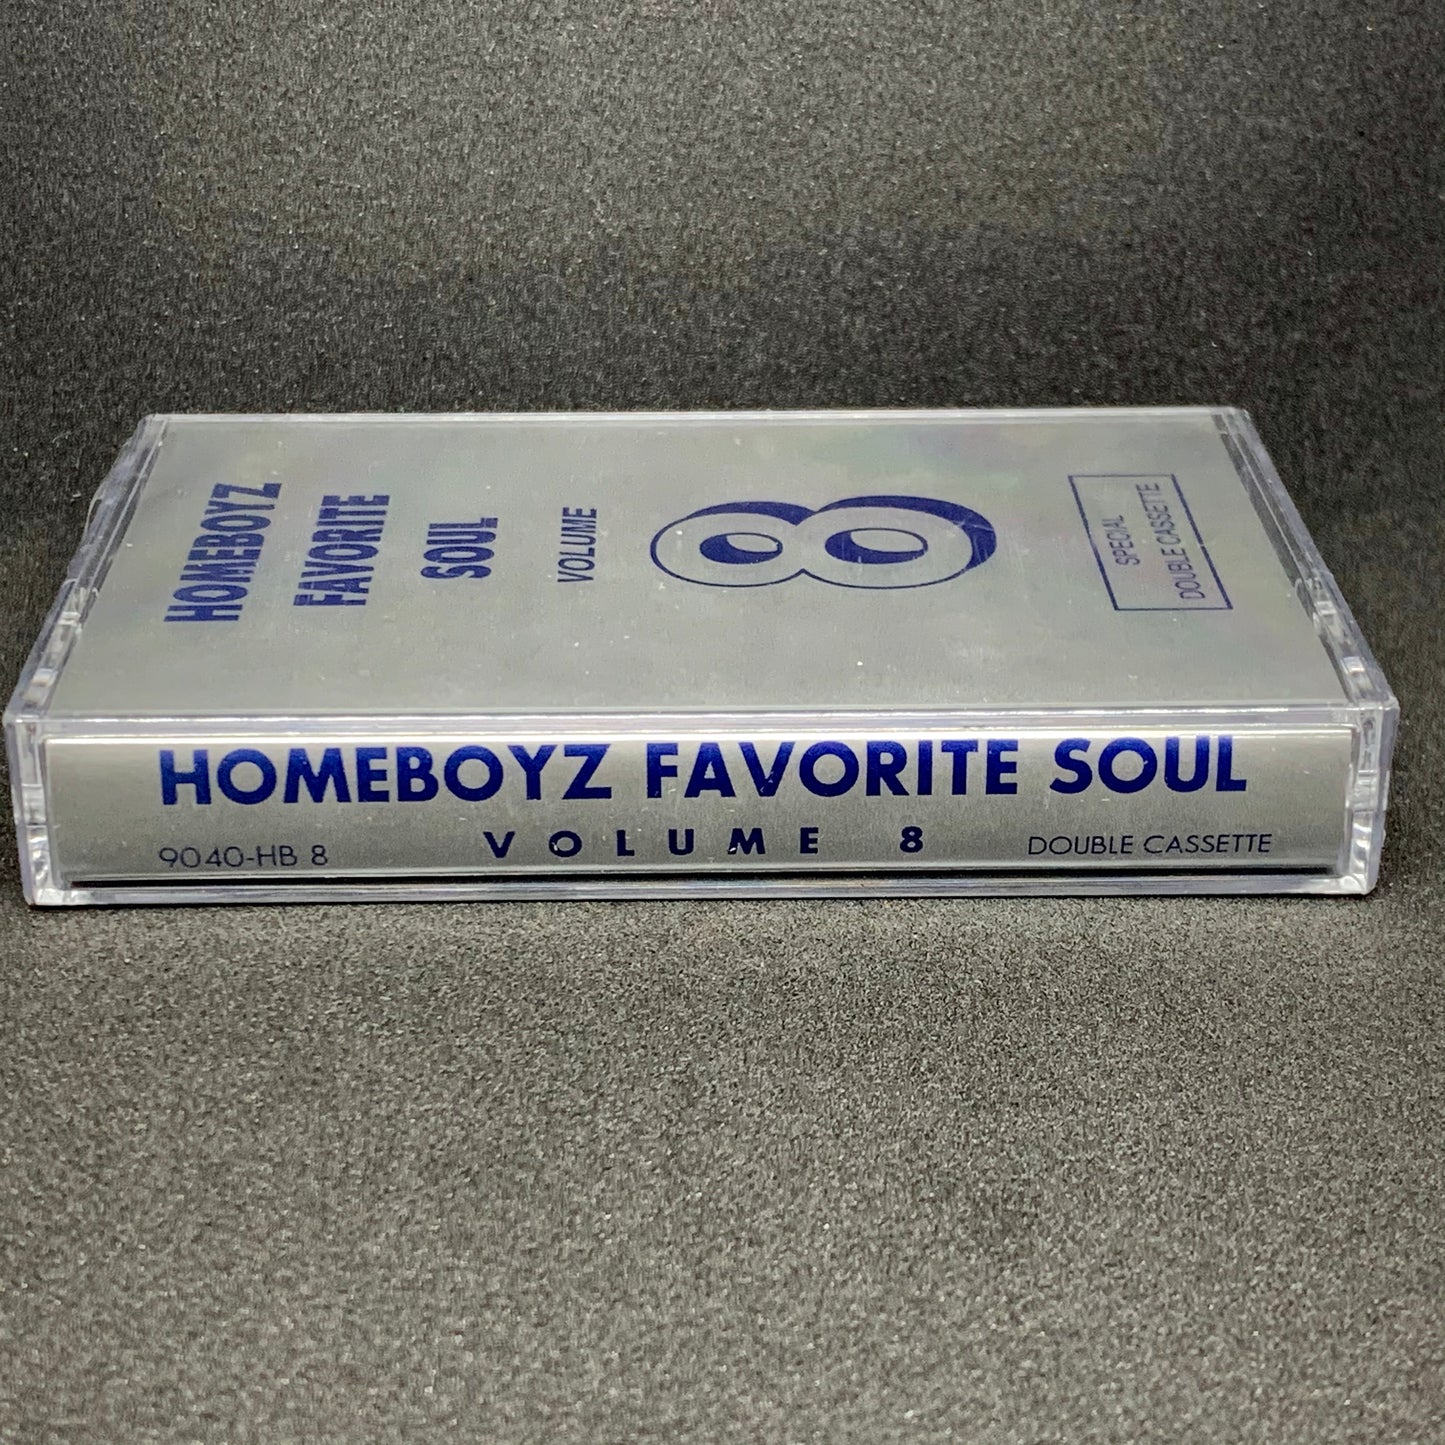 Homeboyz Favorite Soul - Volume 8 (Cassette)